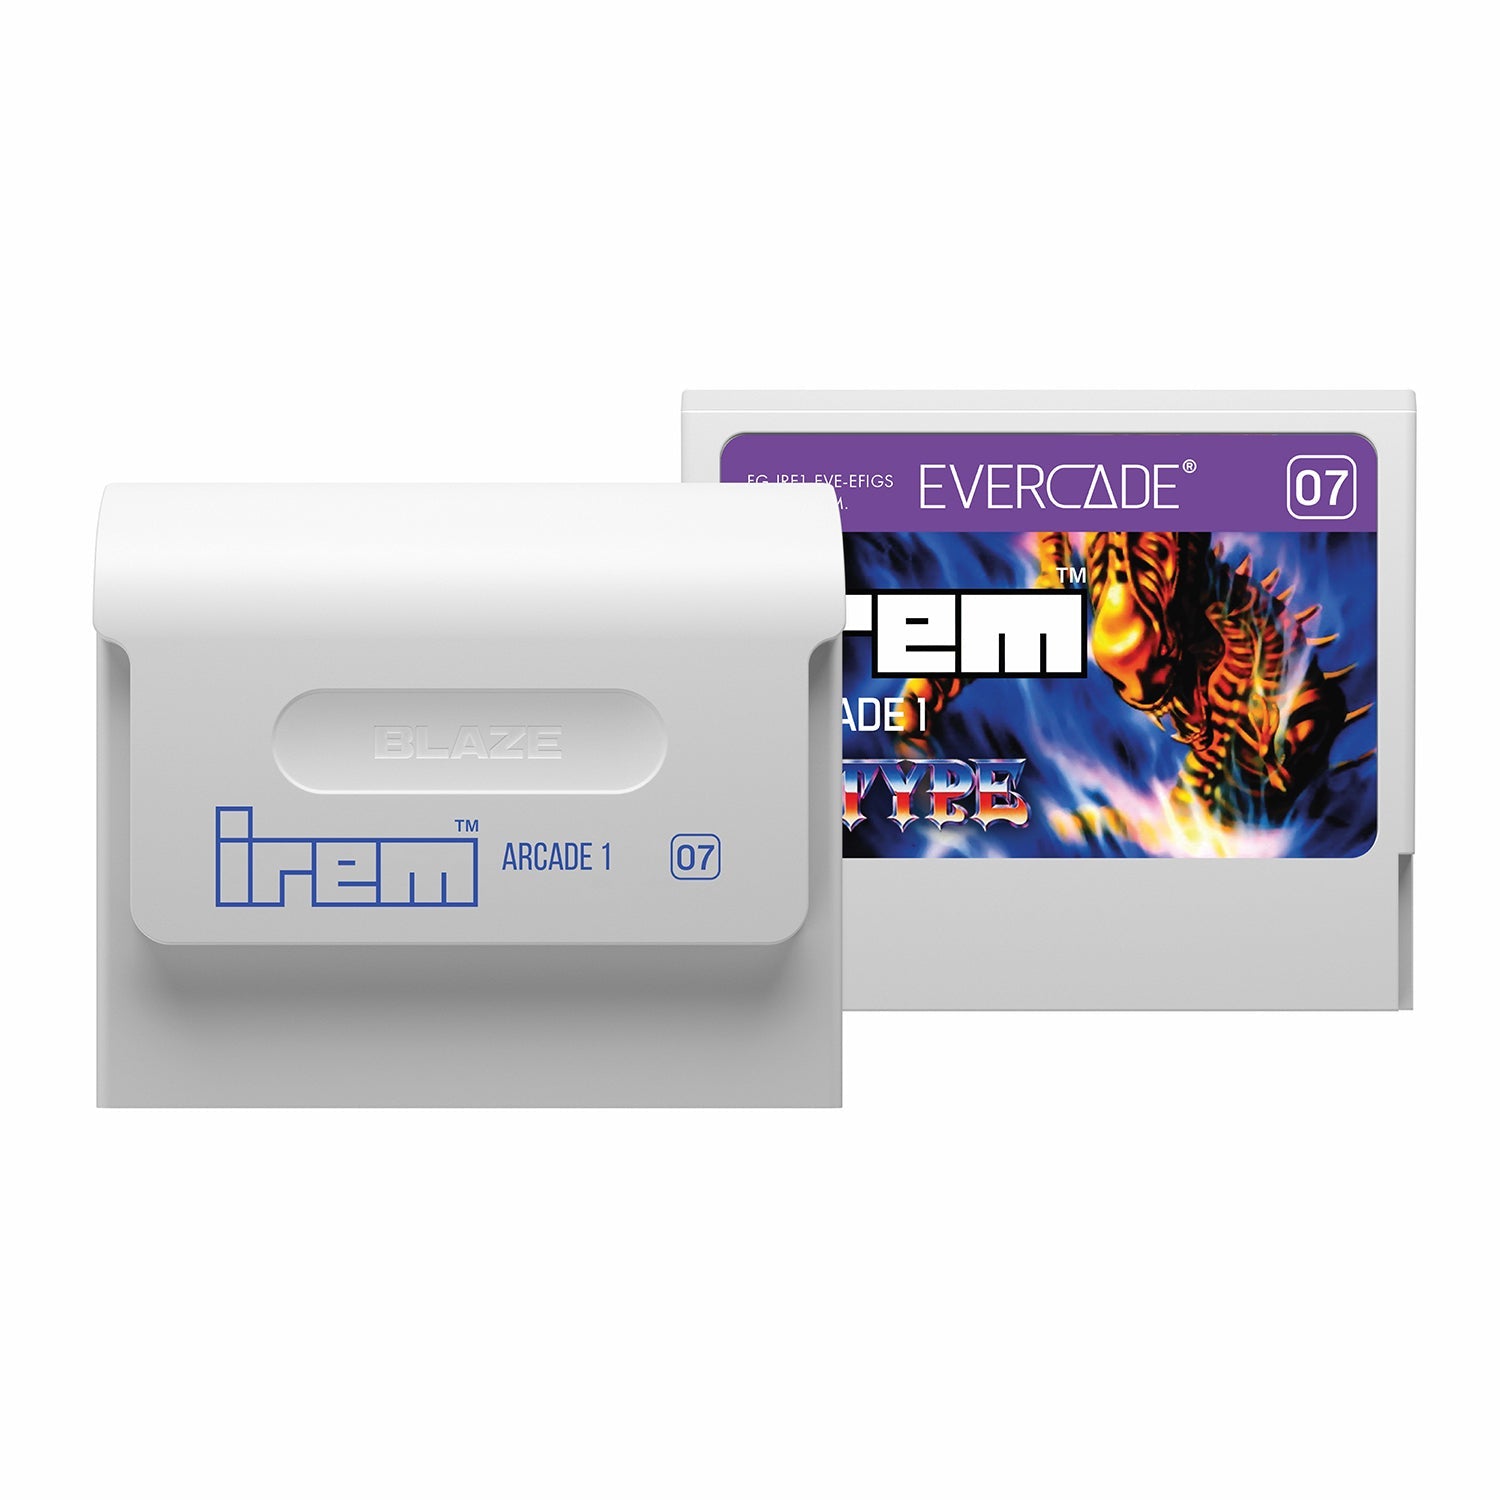 #07 IREM Arcade 1 Collection - Evercade Cartridge